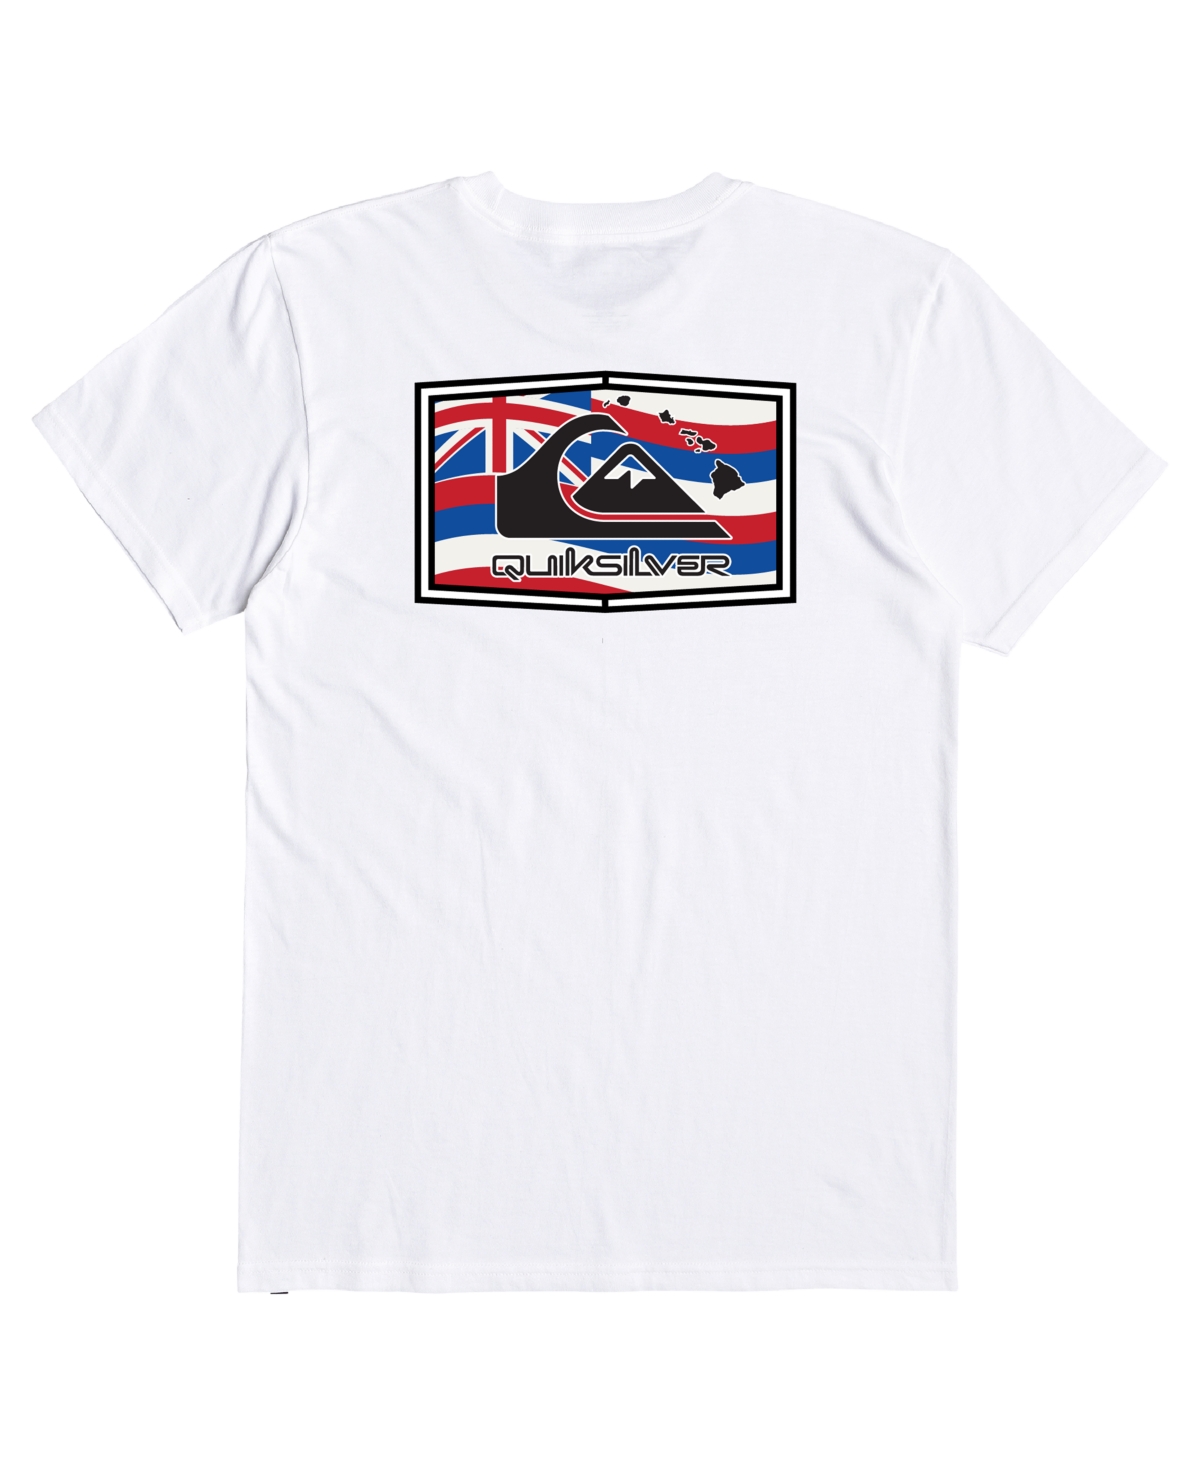 Men's Hi Flagpole Classic Fit T-shirt - White